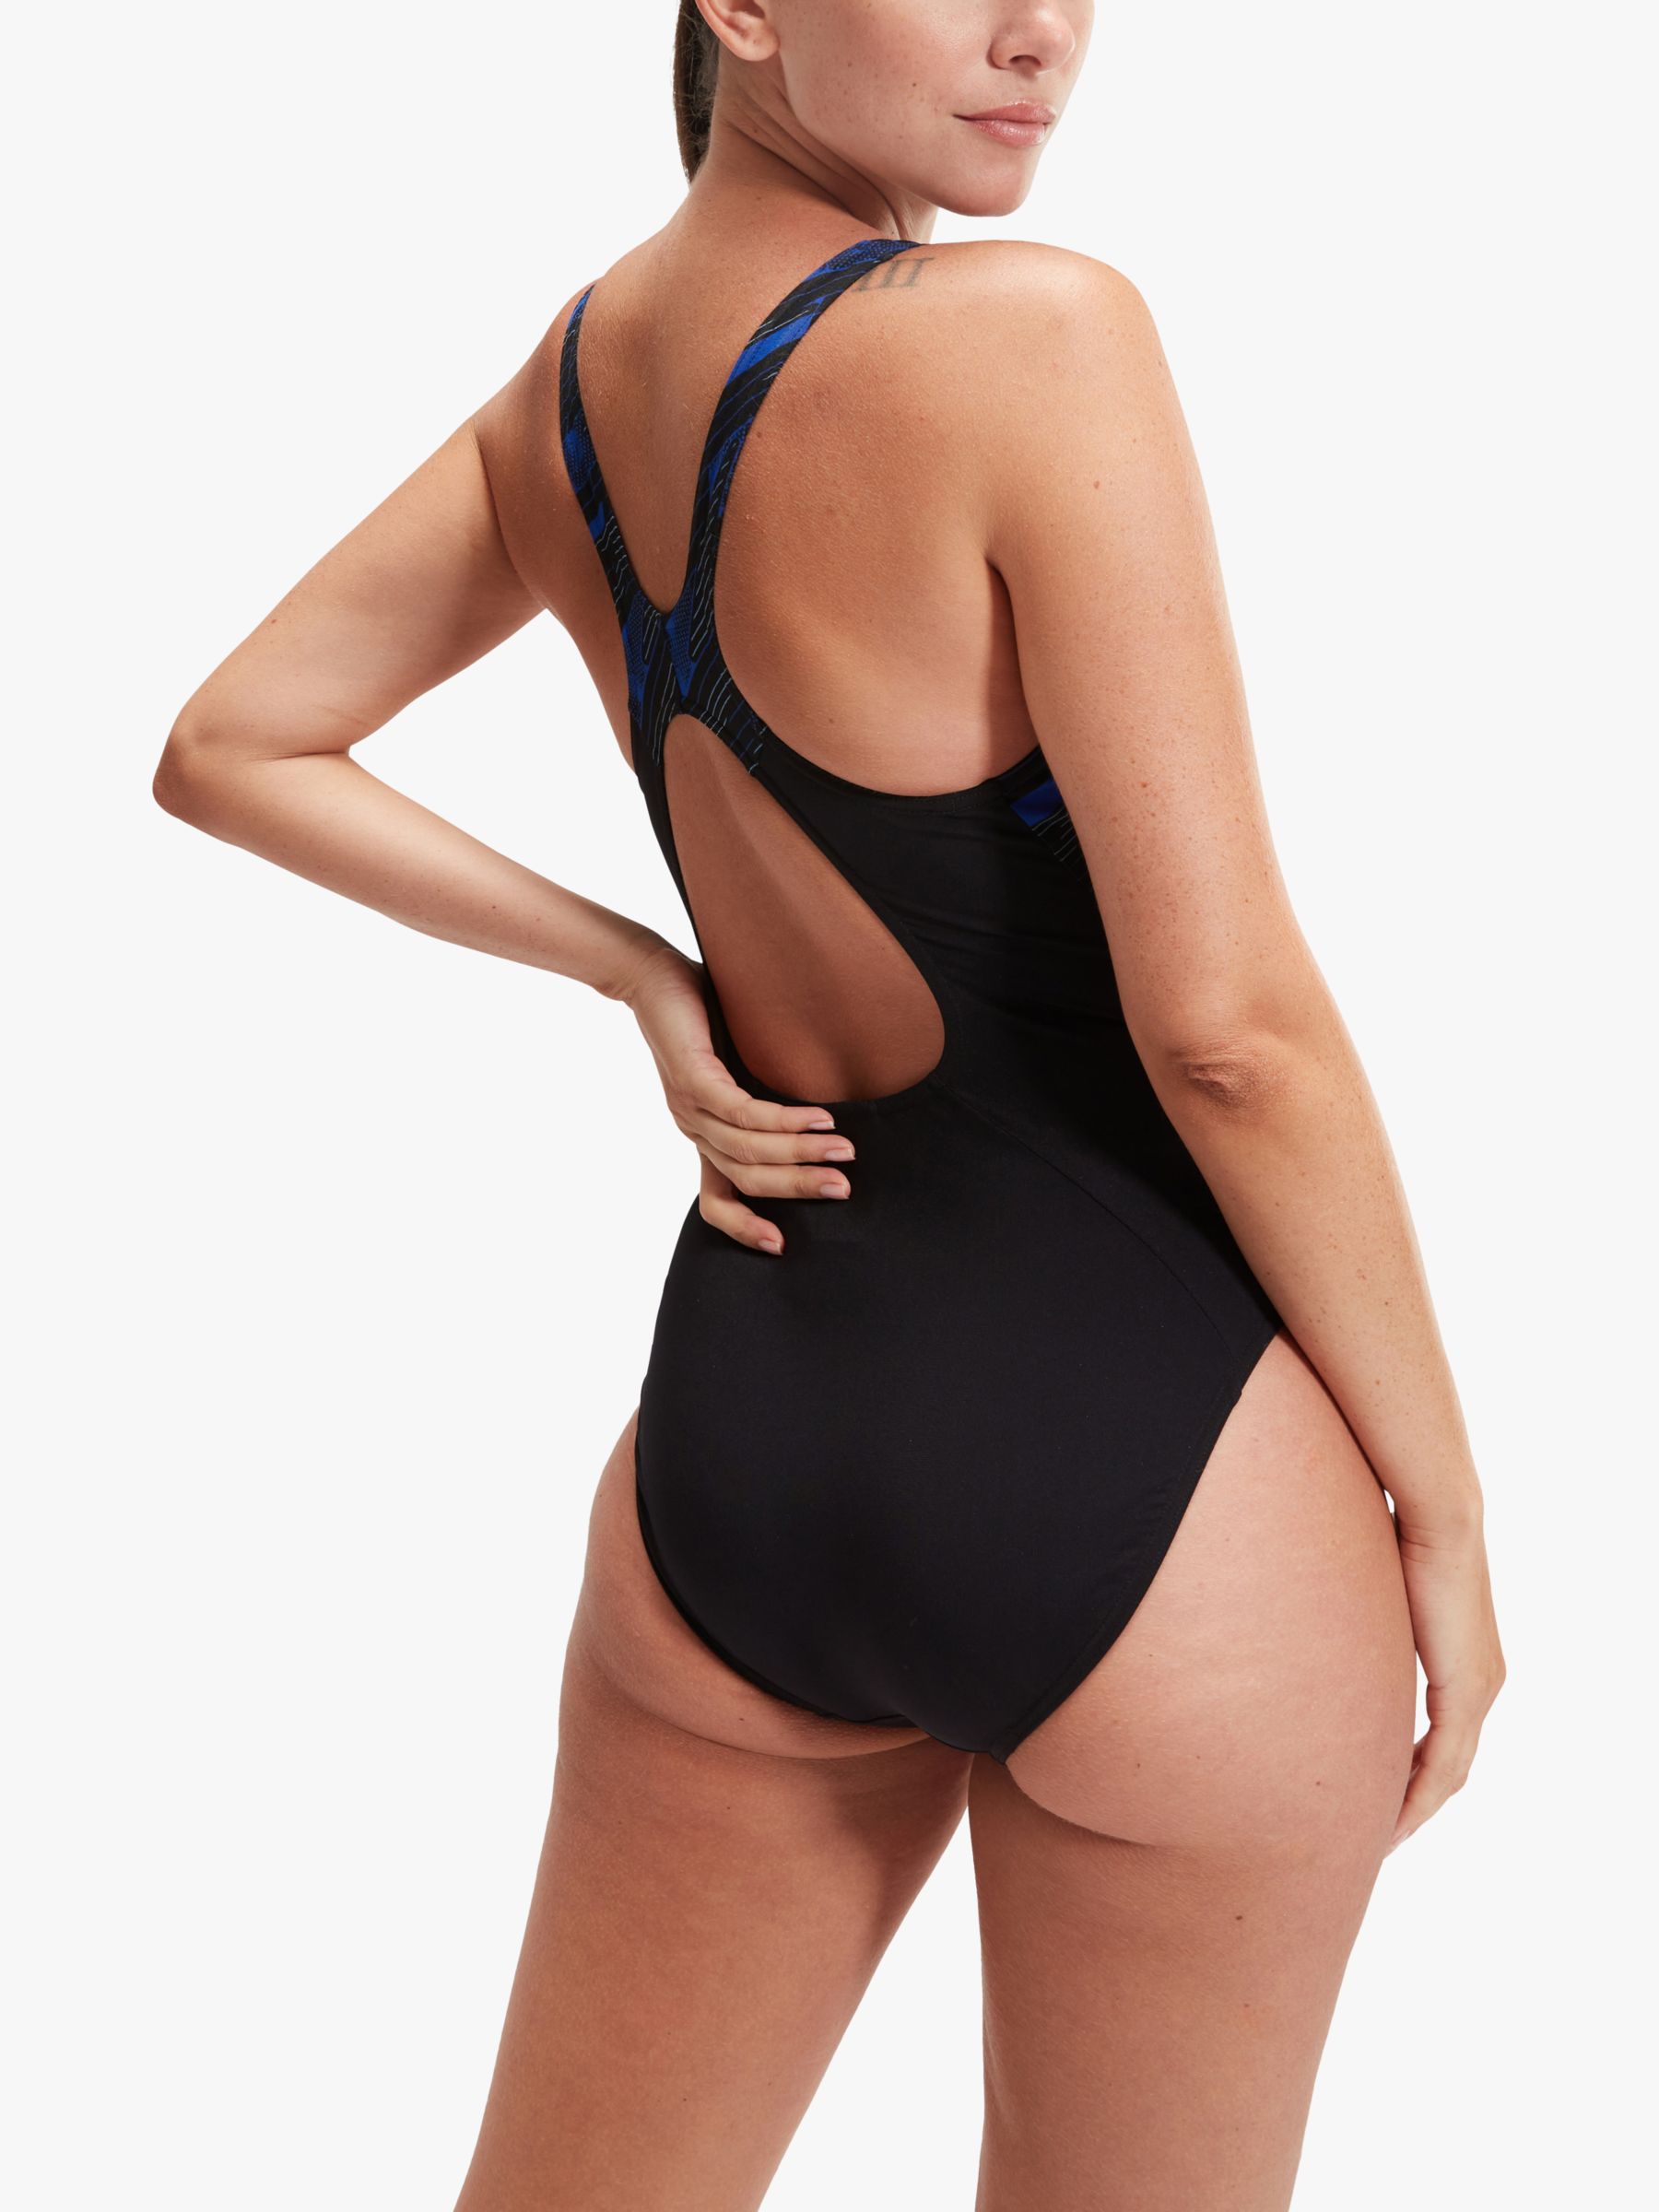 Speedo Women's HyperBoom Splice Muscleback Swimsuit, Black / Cobalt, 40